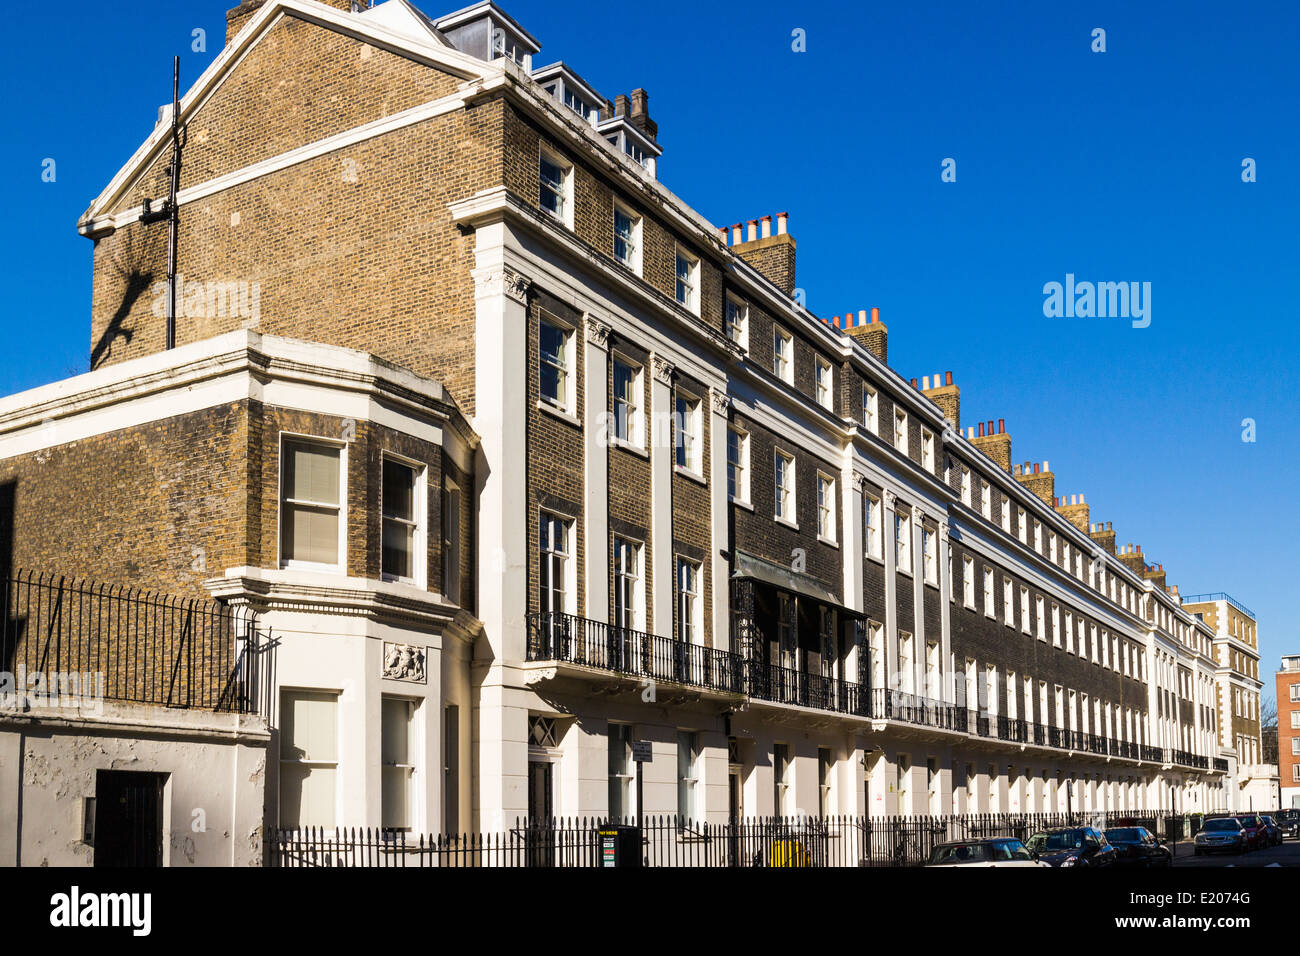 Endsleigh street - London Stock Photo